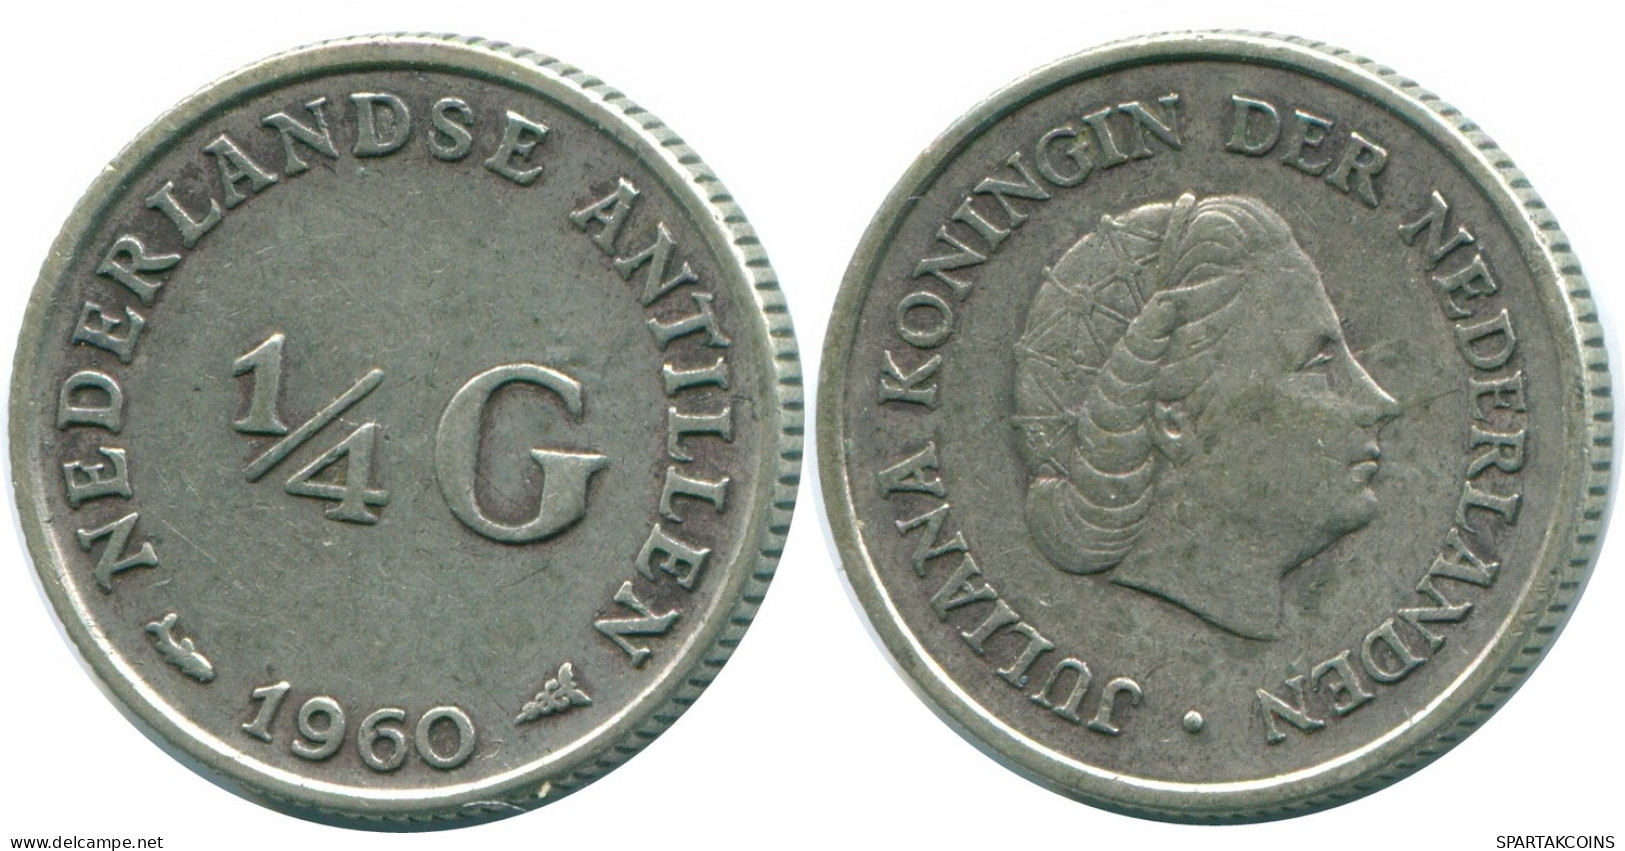 1/4 GULDEN 1960 NETHERLANDS ANTILLES SILVER Colonial Coin #NL11083.4.U.A - Netherlands Antilles